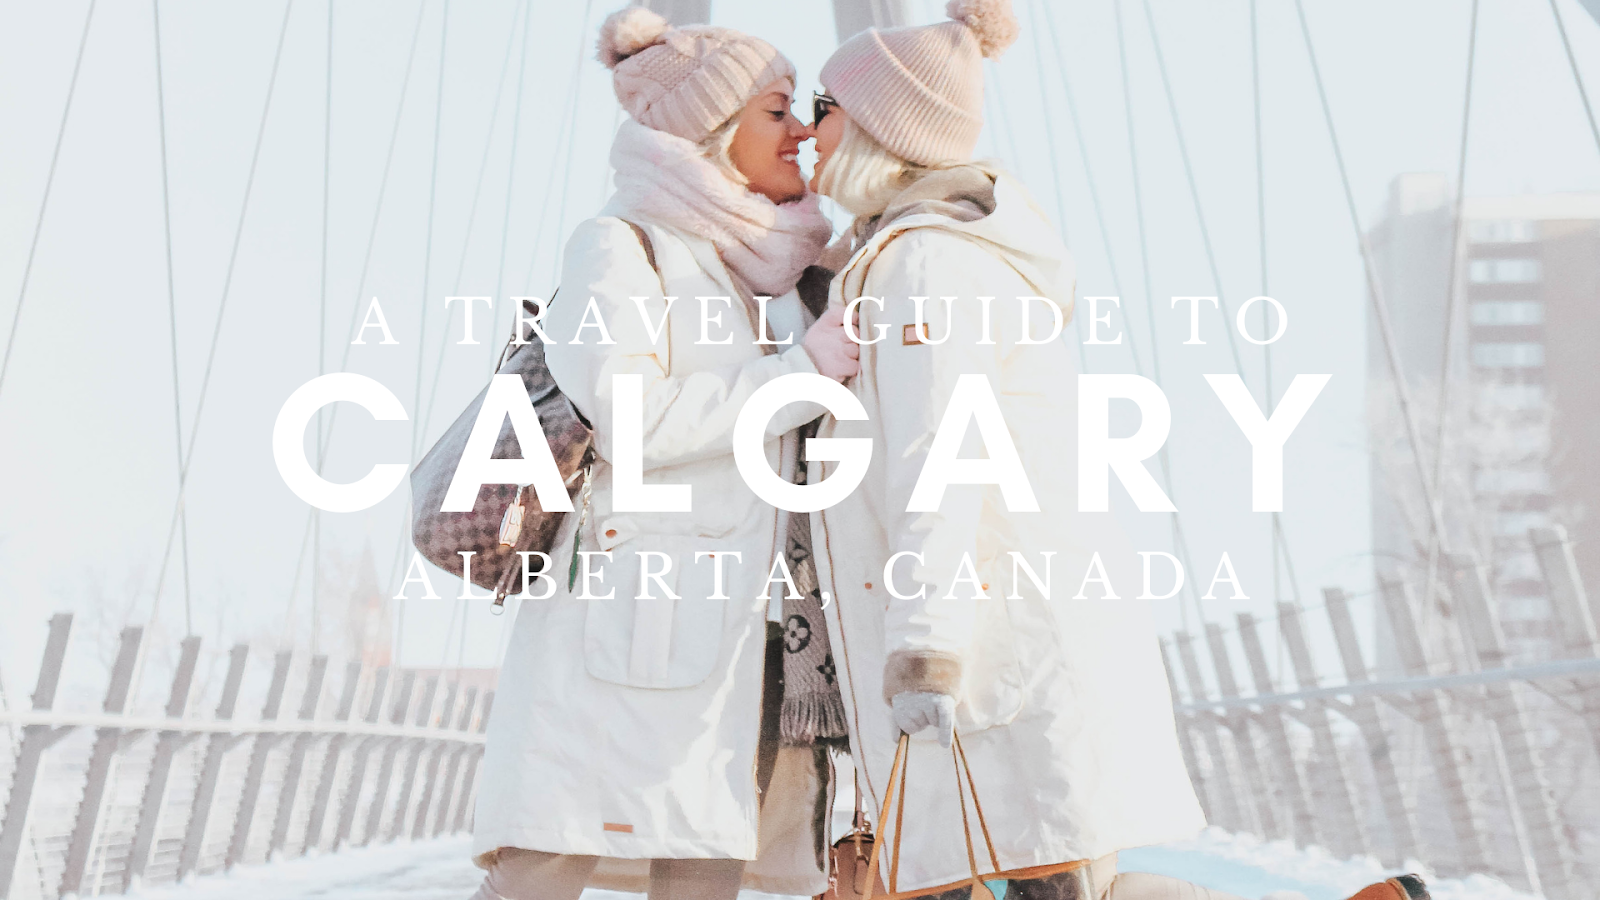 Travel guide to Calgary, Alberta, Canada